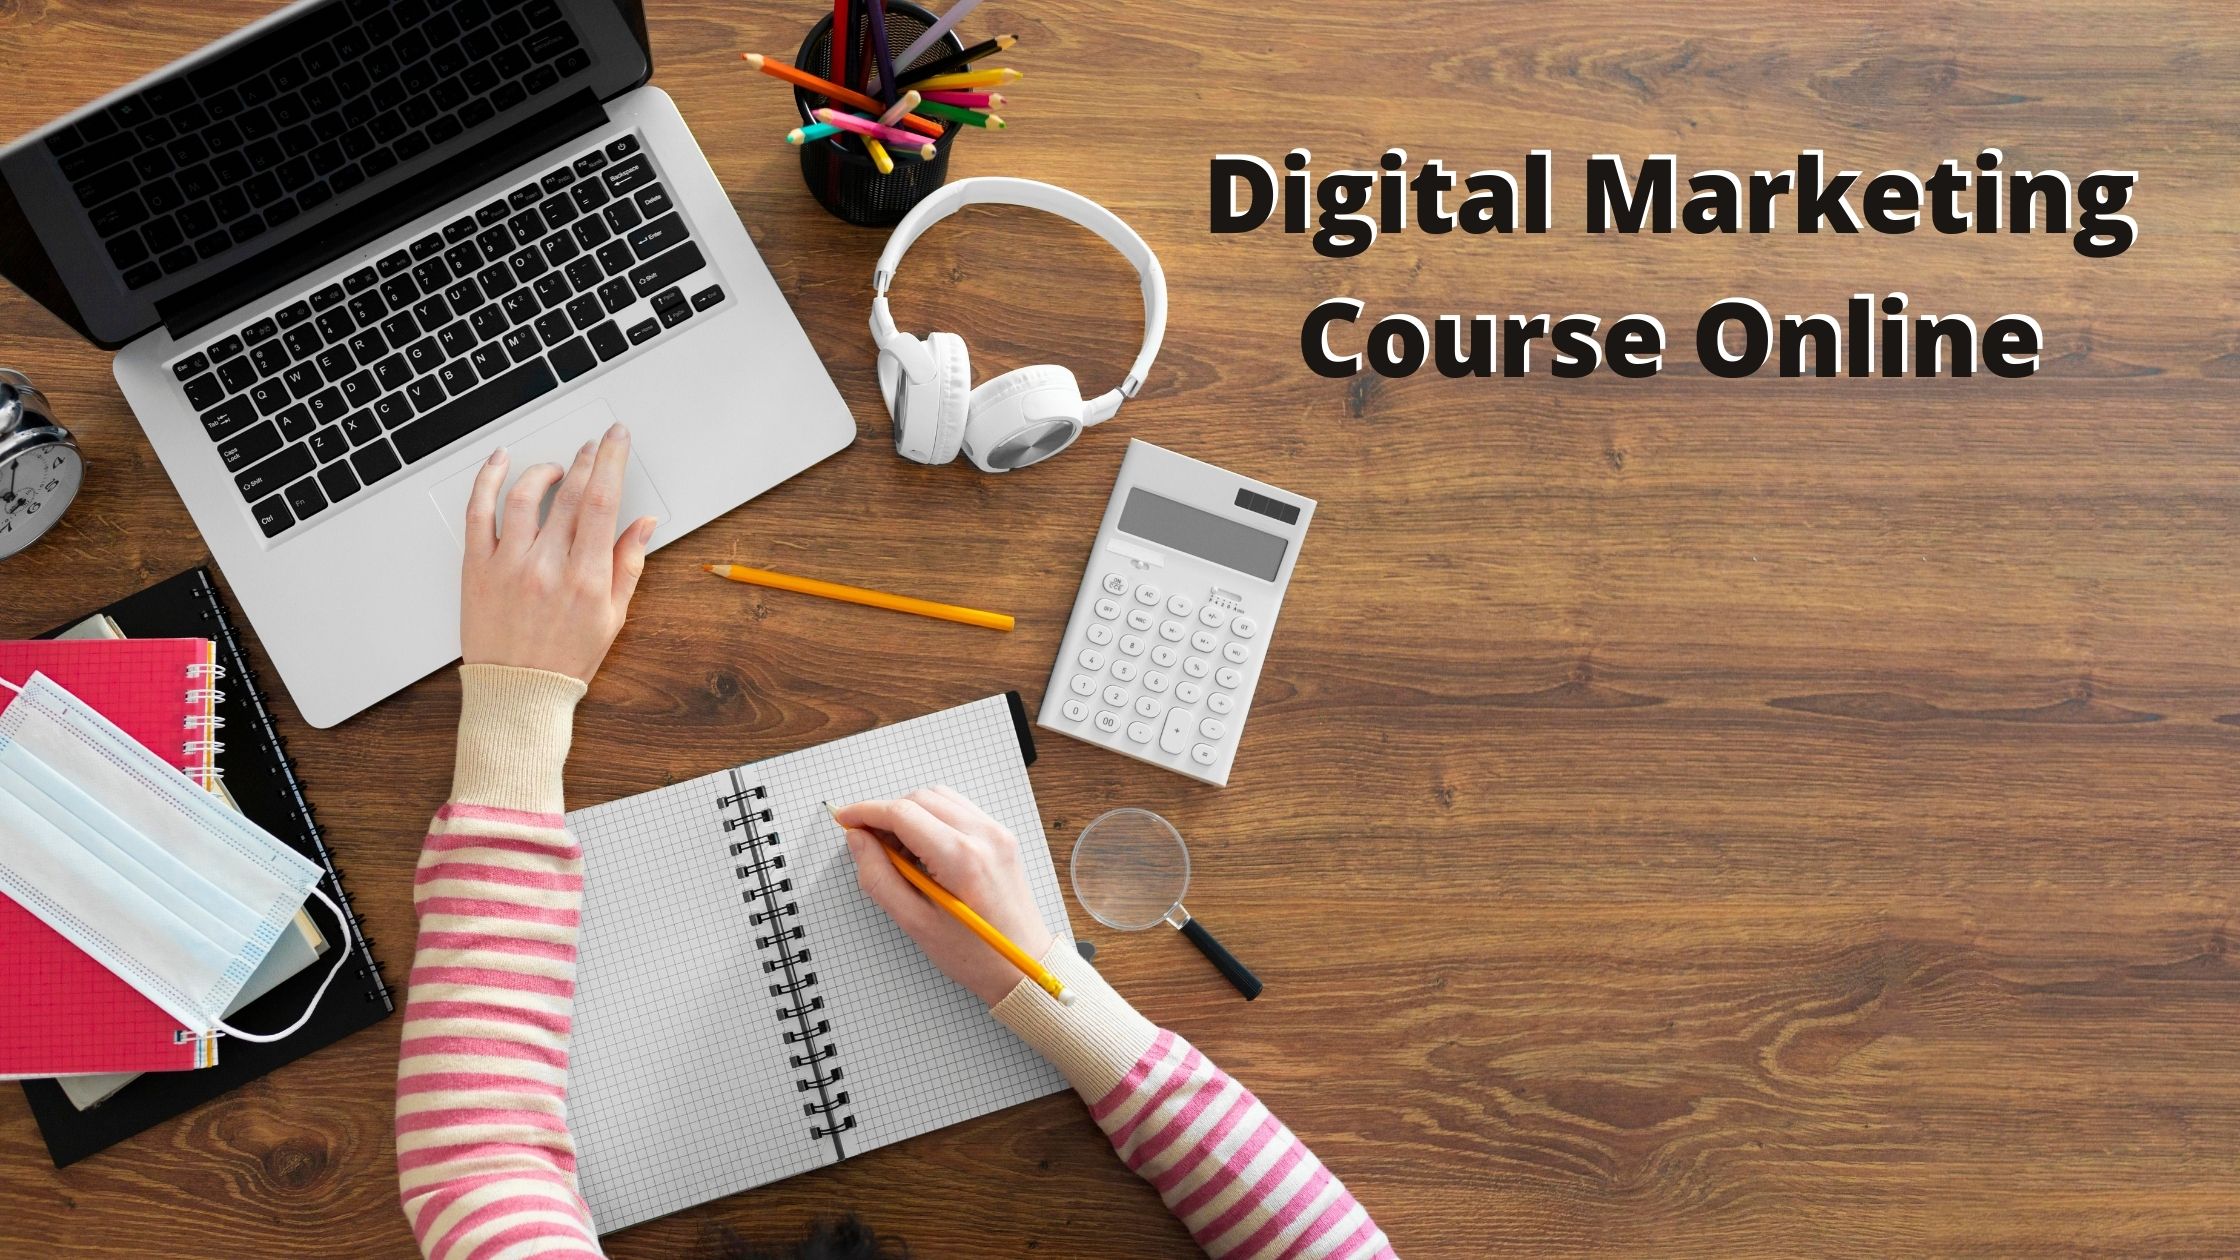 Course in Digital Marketing Online